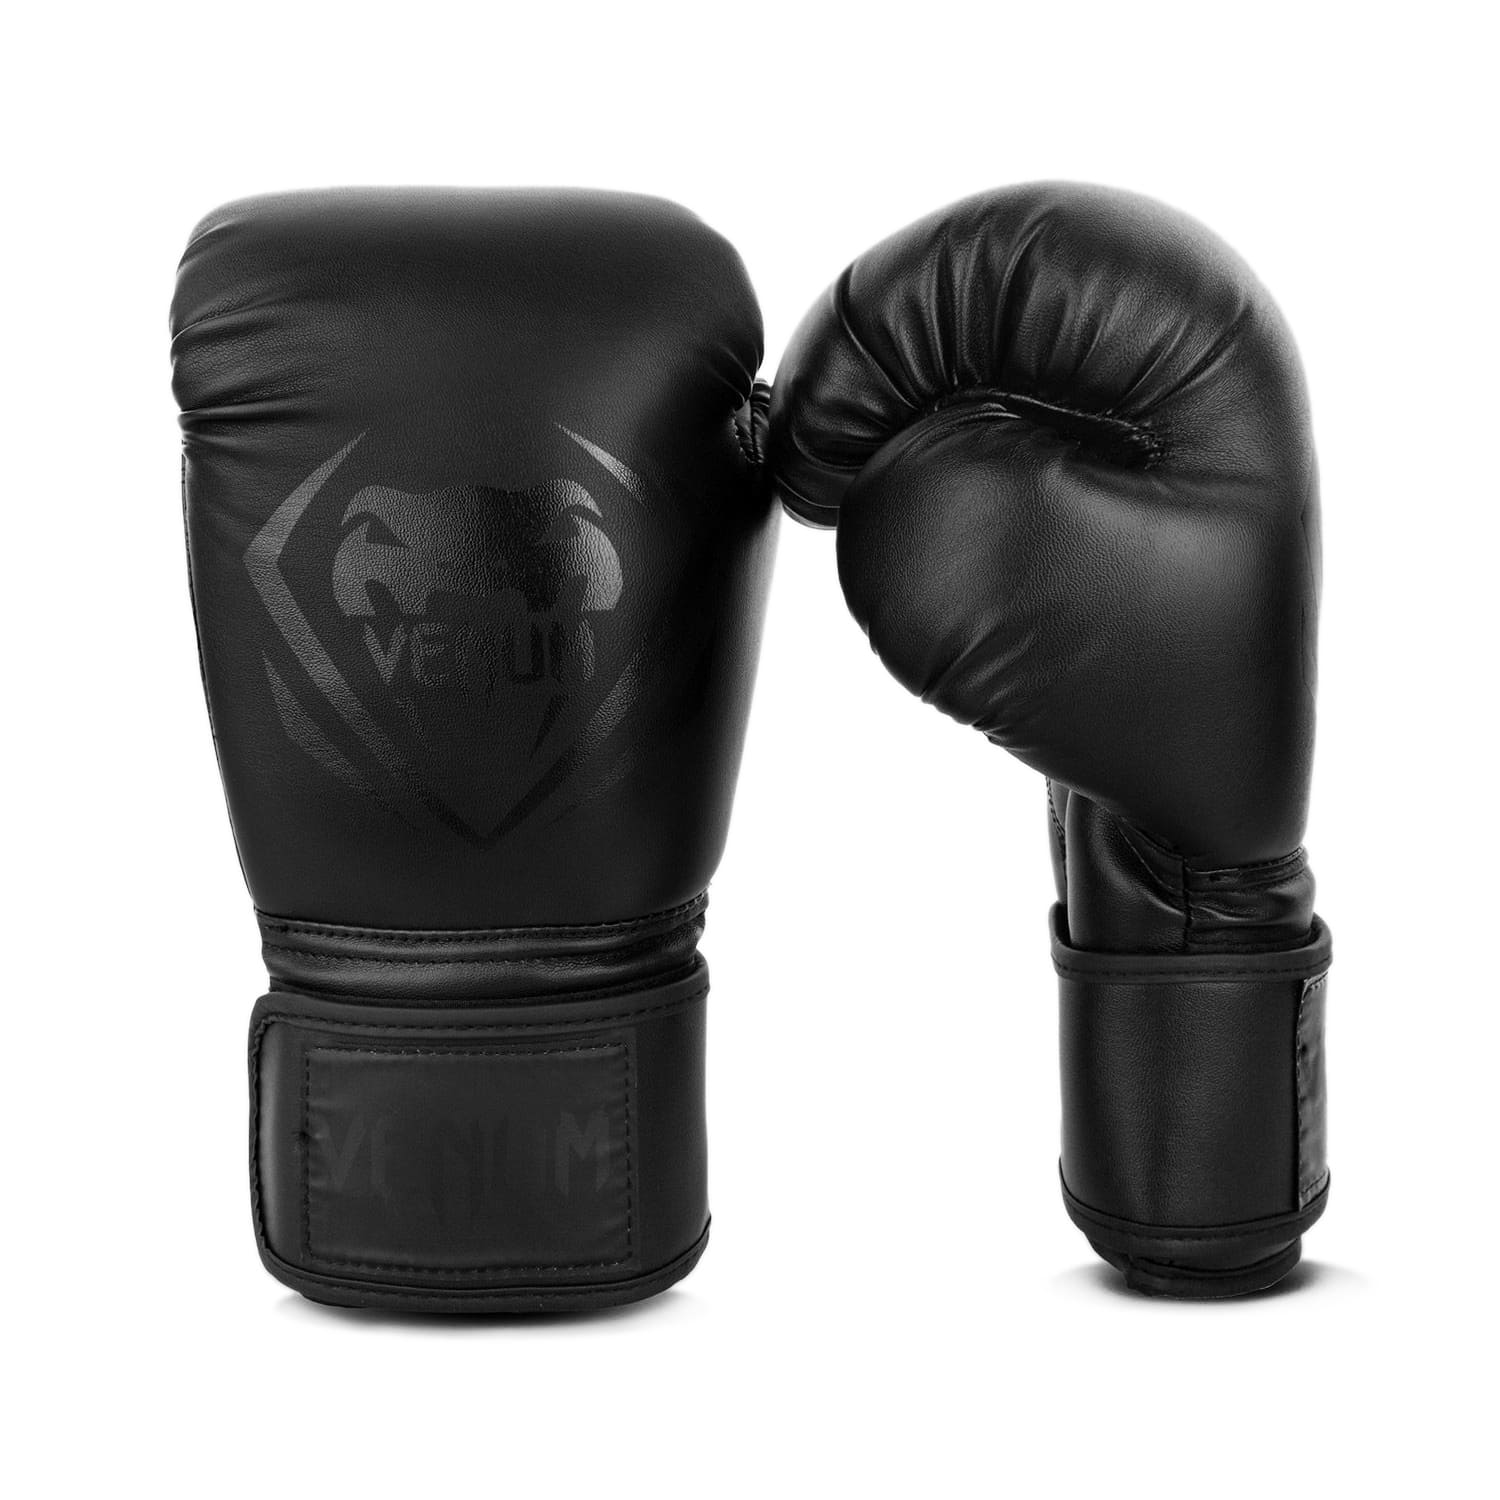 Venum 16 Oz Contender Boxing Gloves, Black